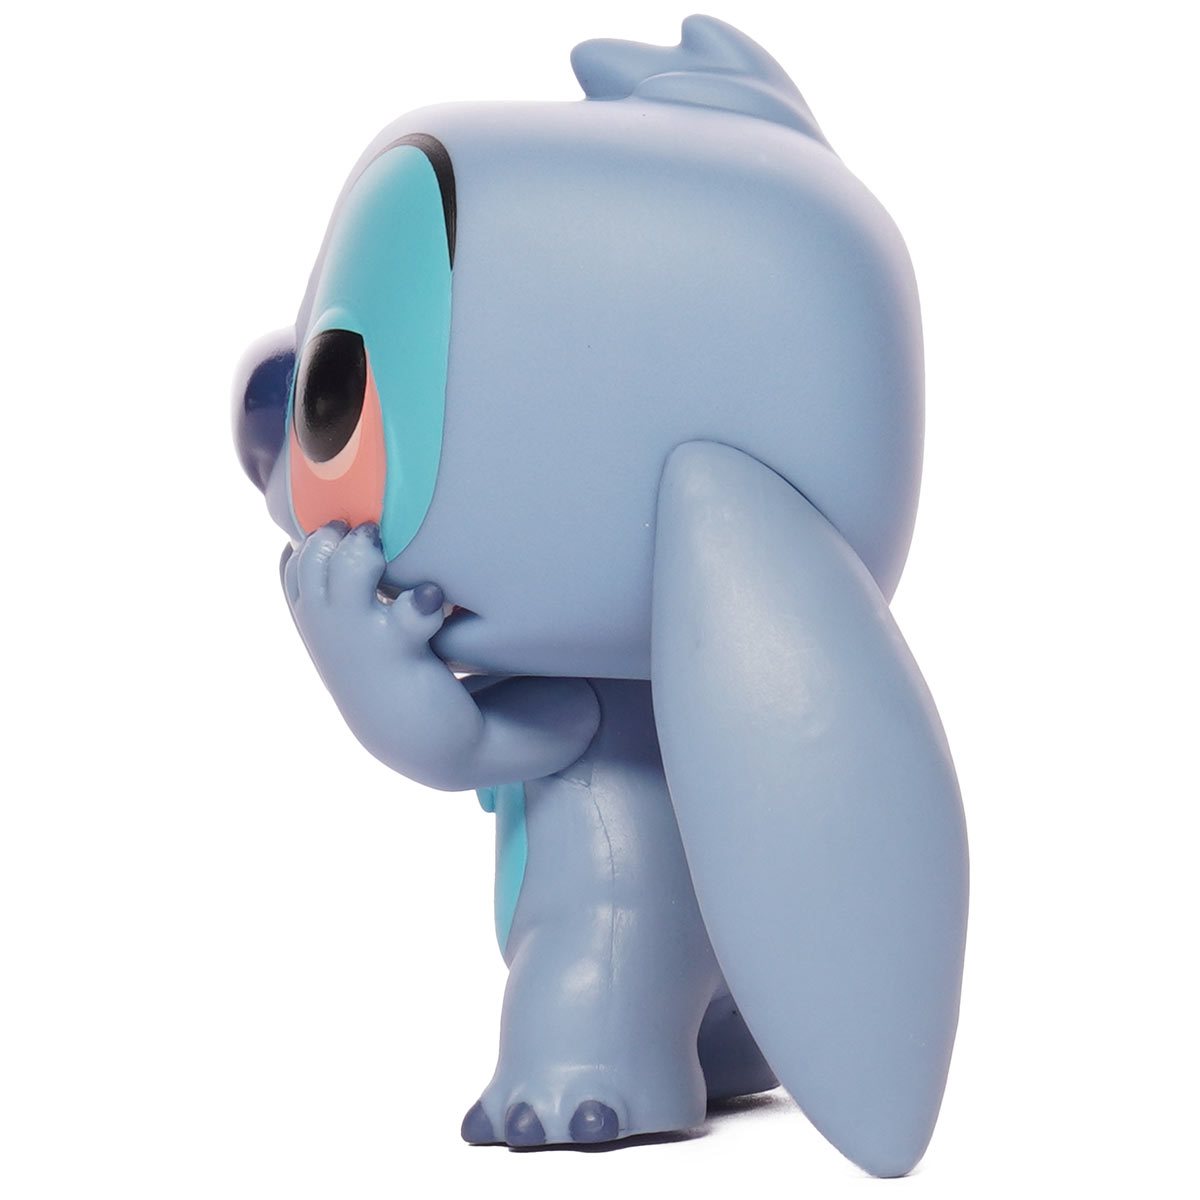 Funko Pop! Disney: Lilo and Stitch – Entertainment Earth Exclusive Annoyed  Stitch 1222